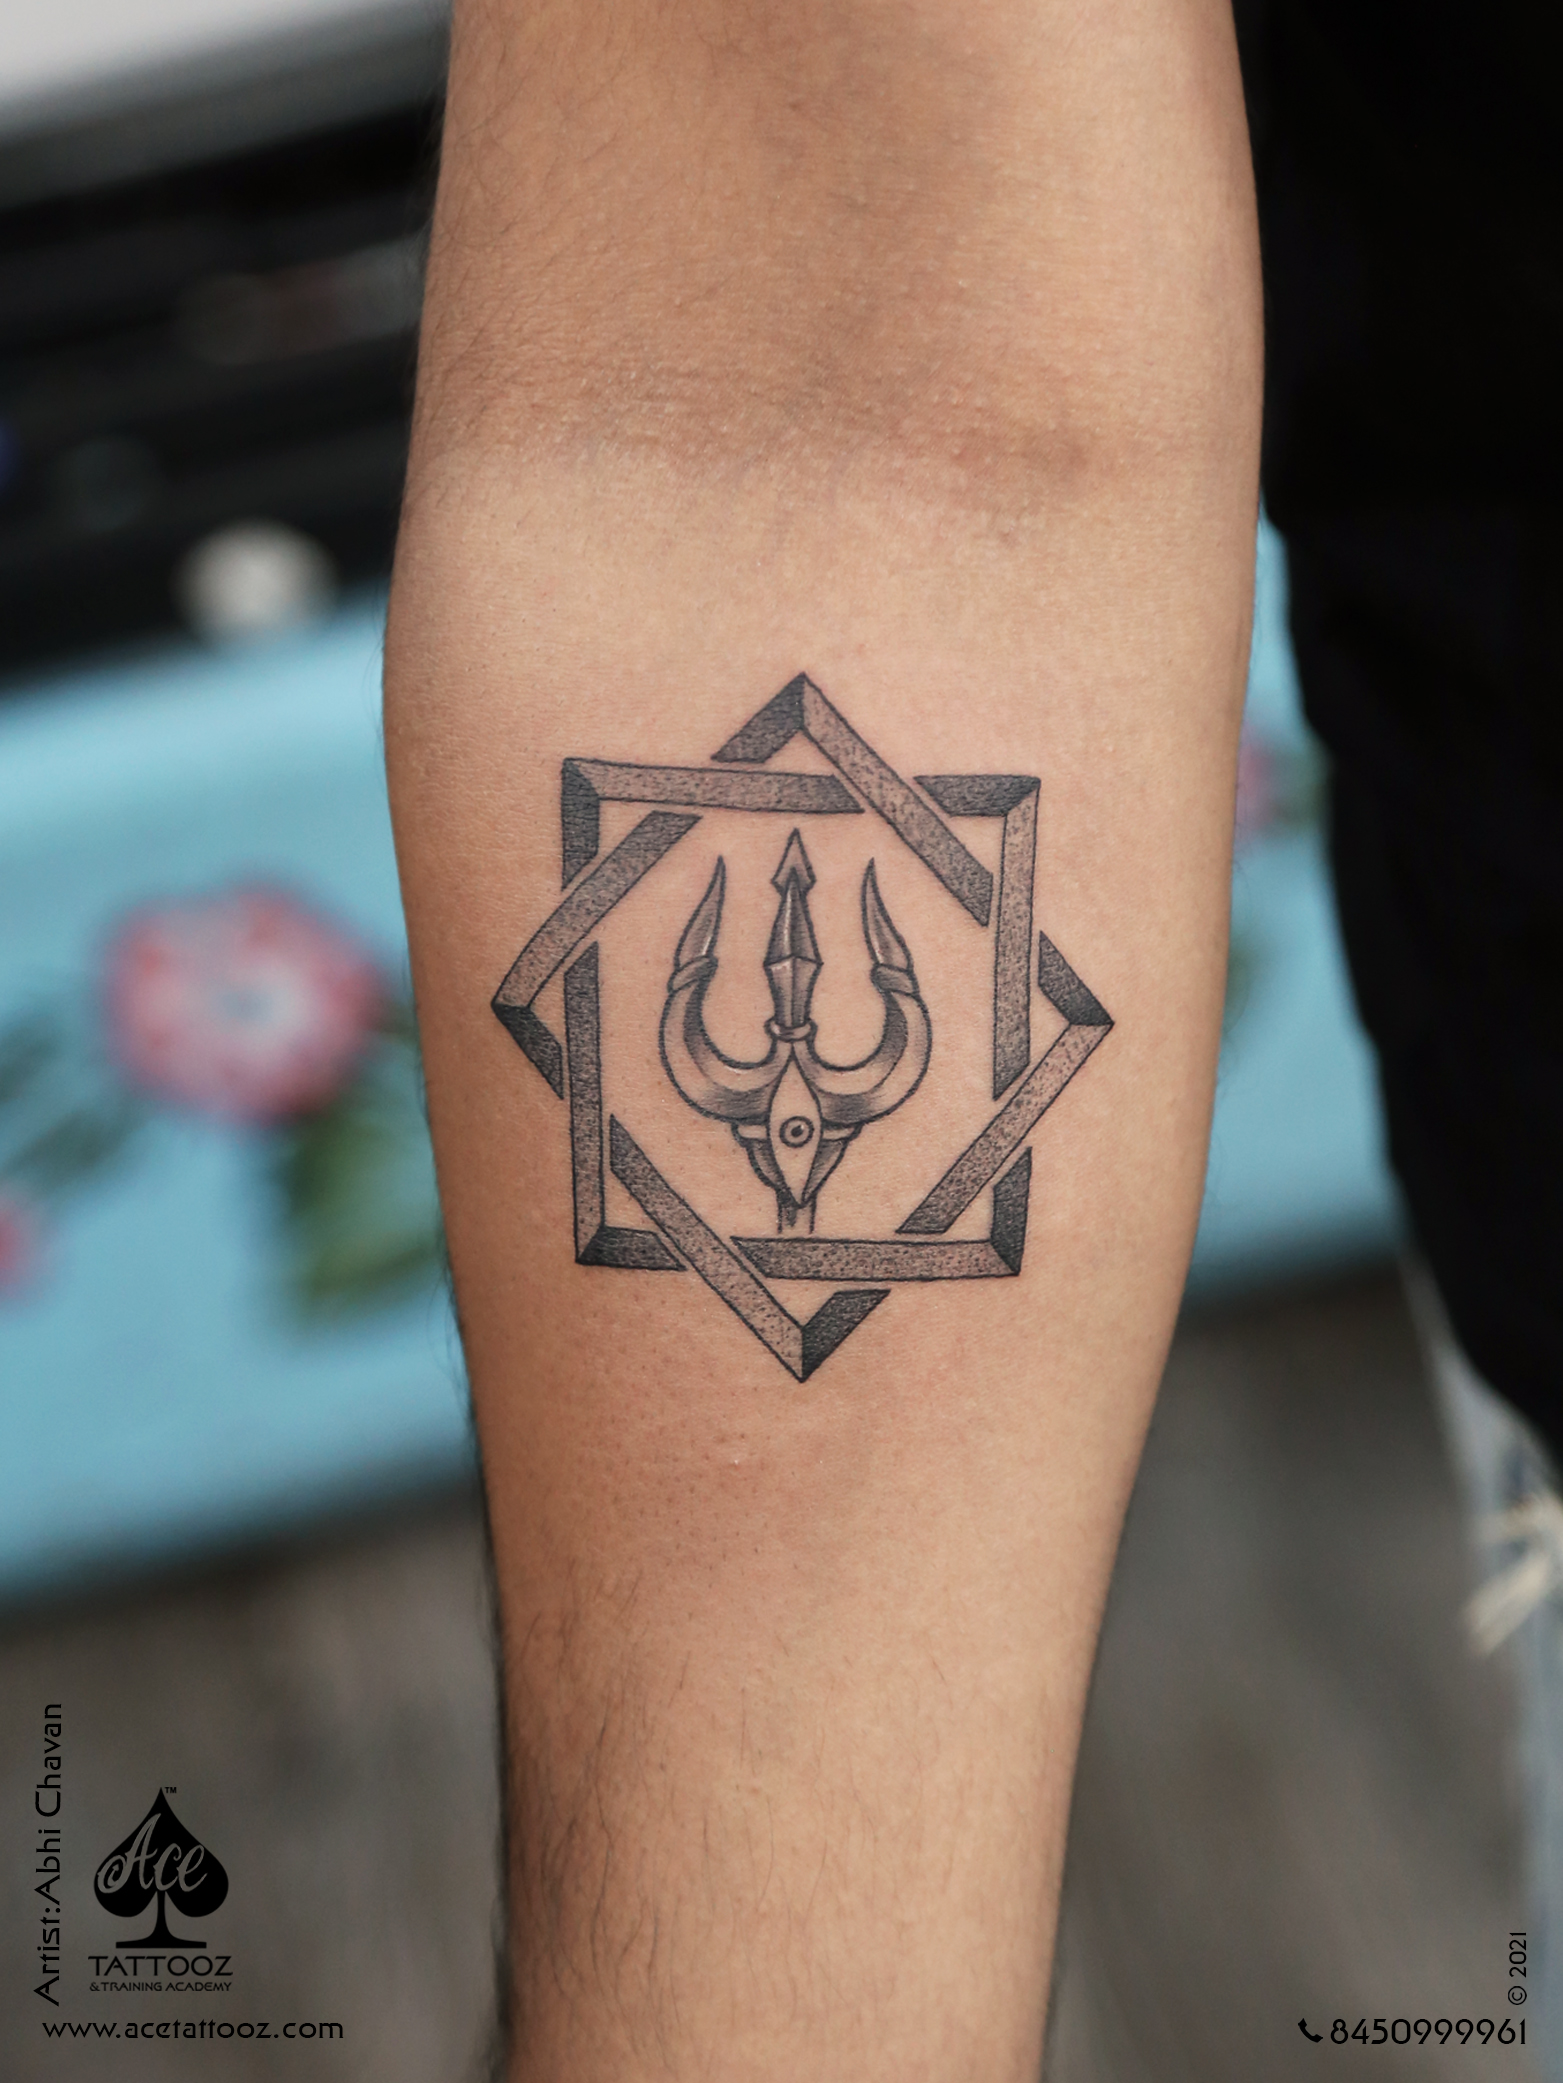 15 Amazing Shiva (Mahadev) Tattoo Designs on Neck